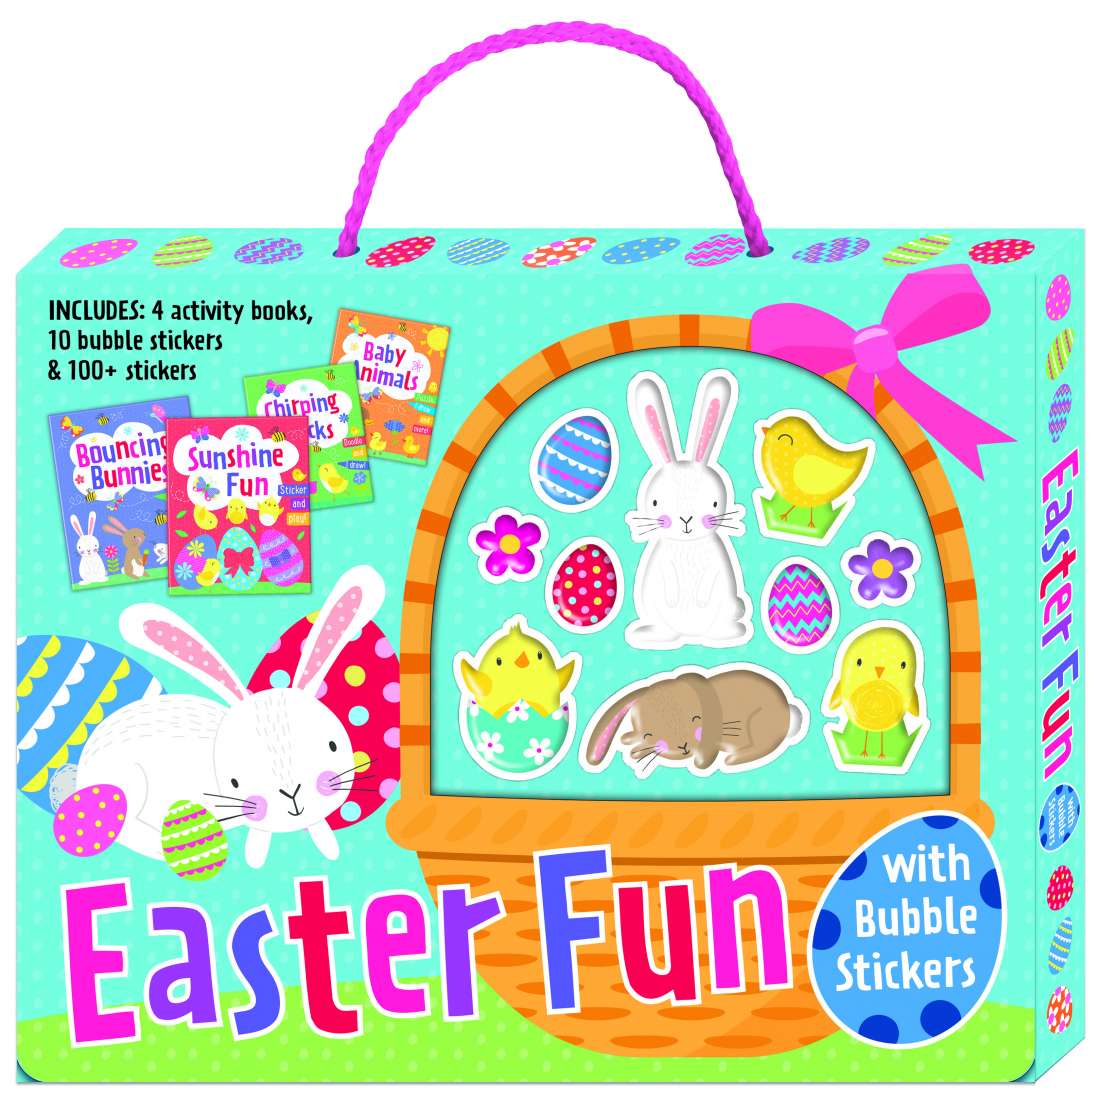 Easter Fun Bubble Sticker Activity Case